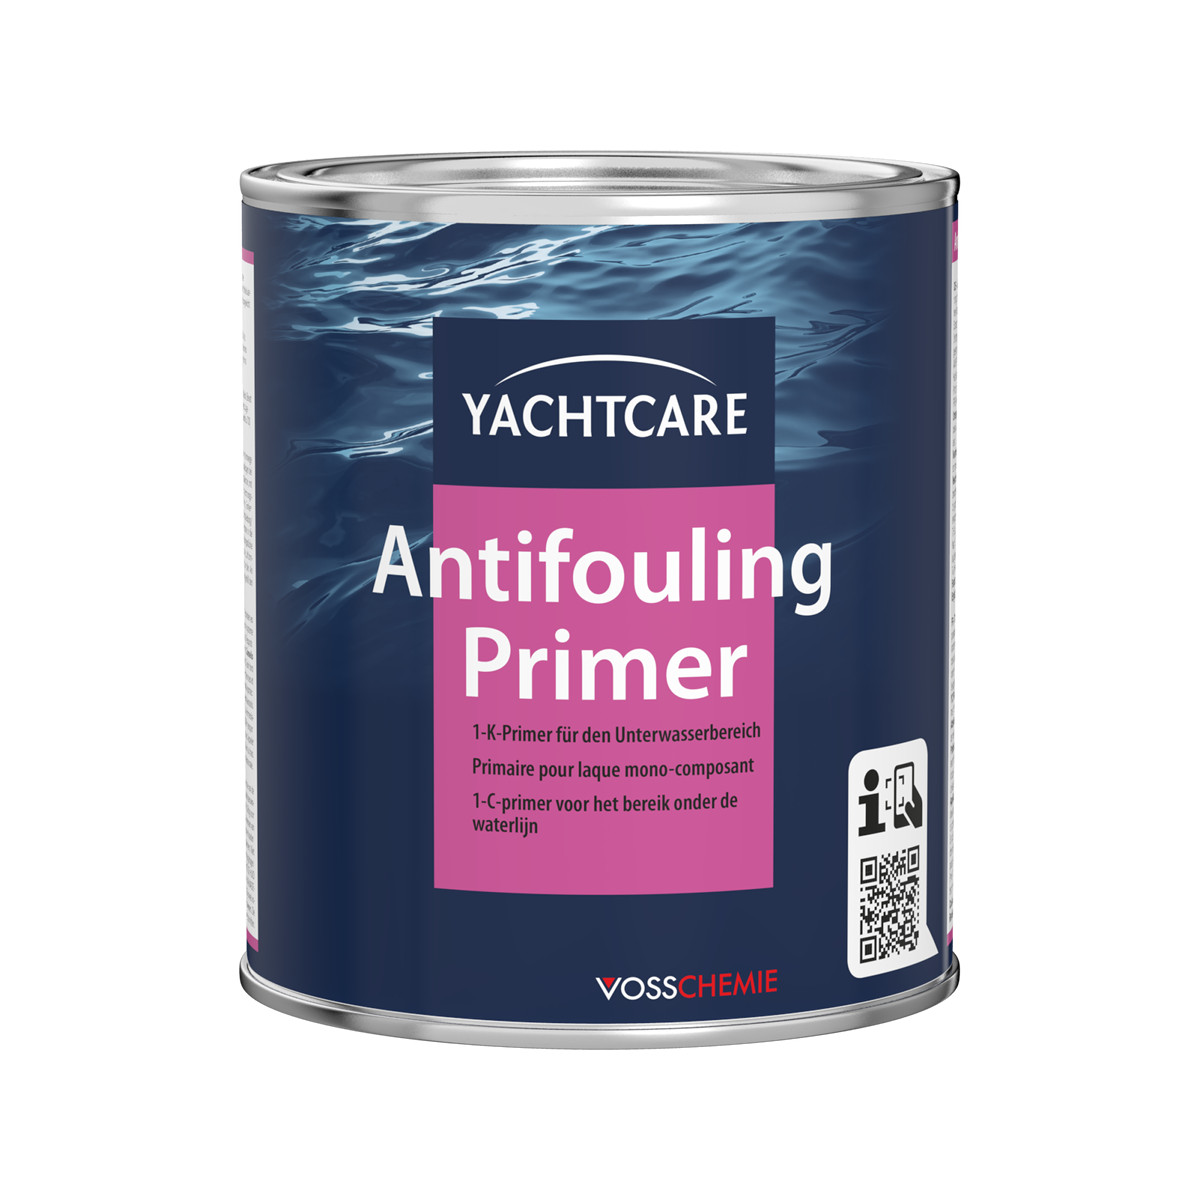 Yachtcare Antifouling Primer primaire - gris, 2500ml